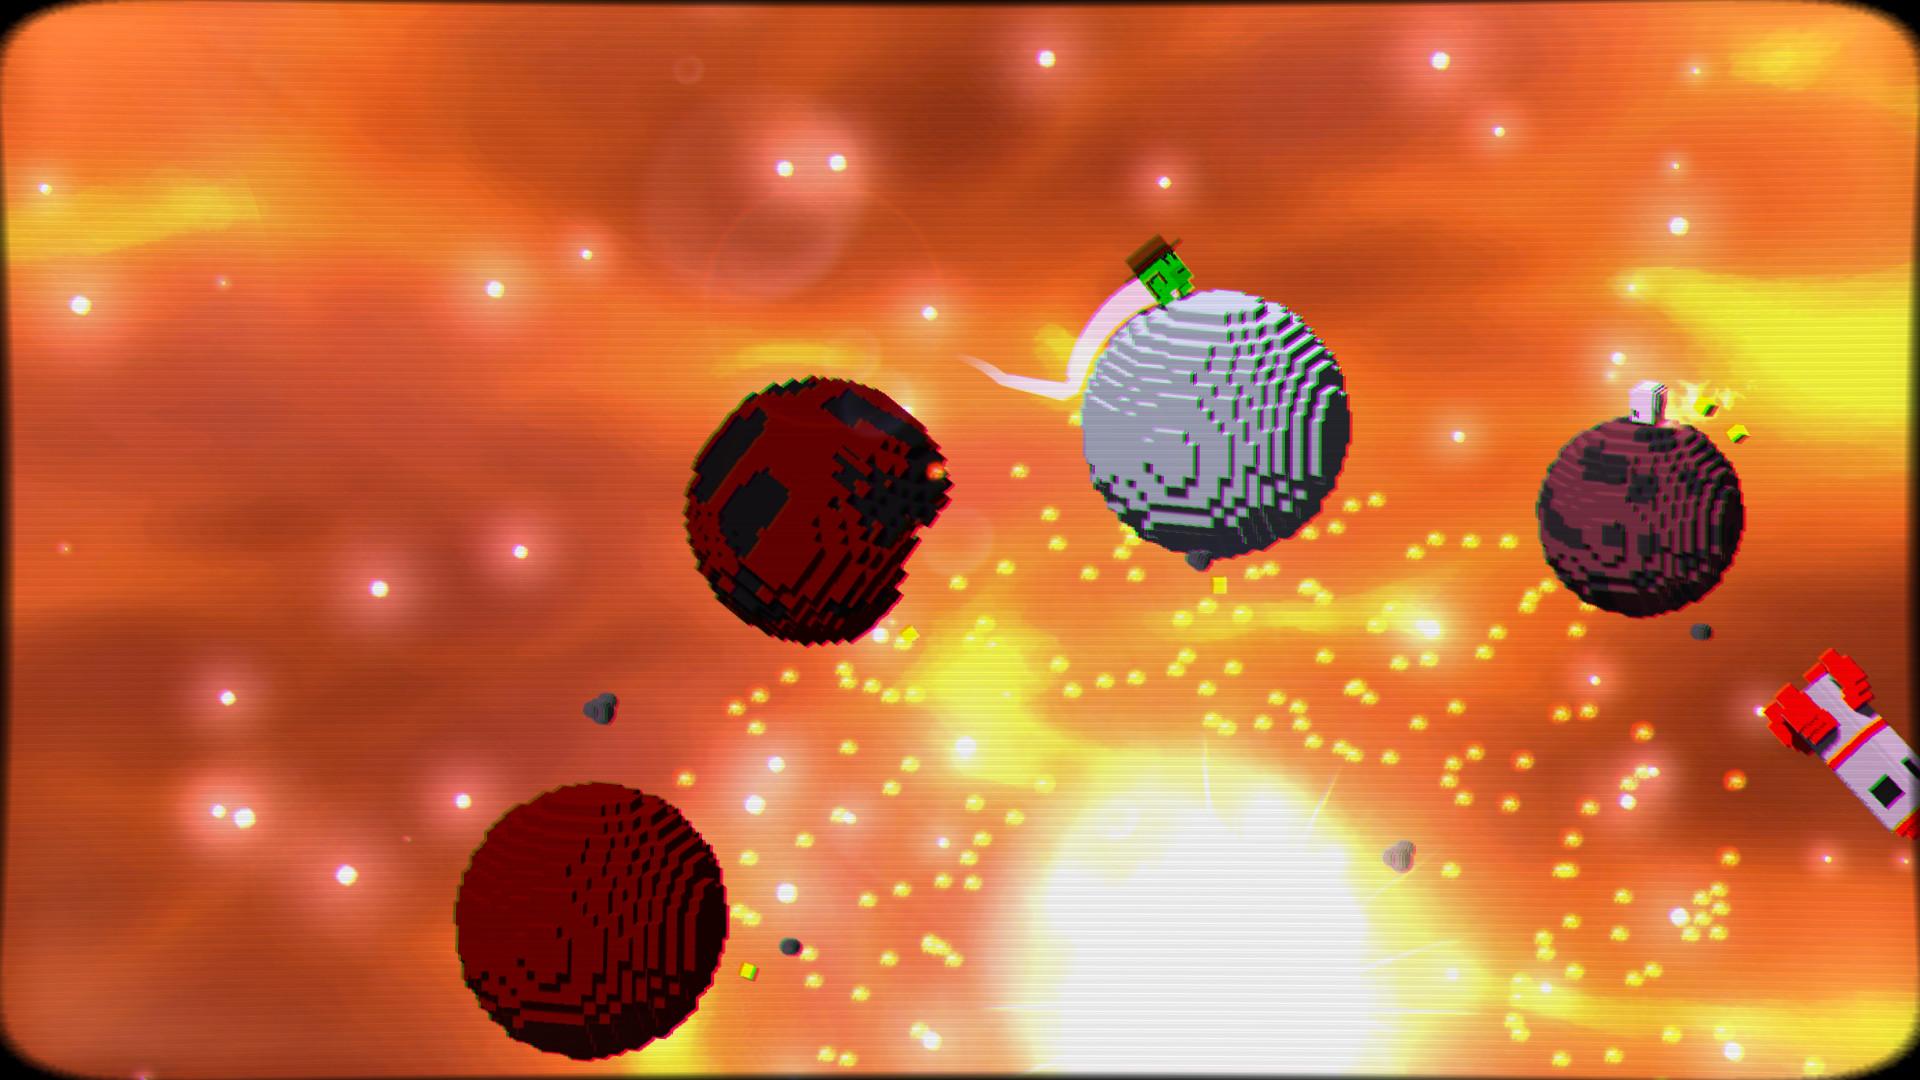 Screenshot №7 from game Cosmic Leap